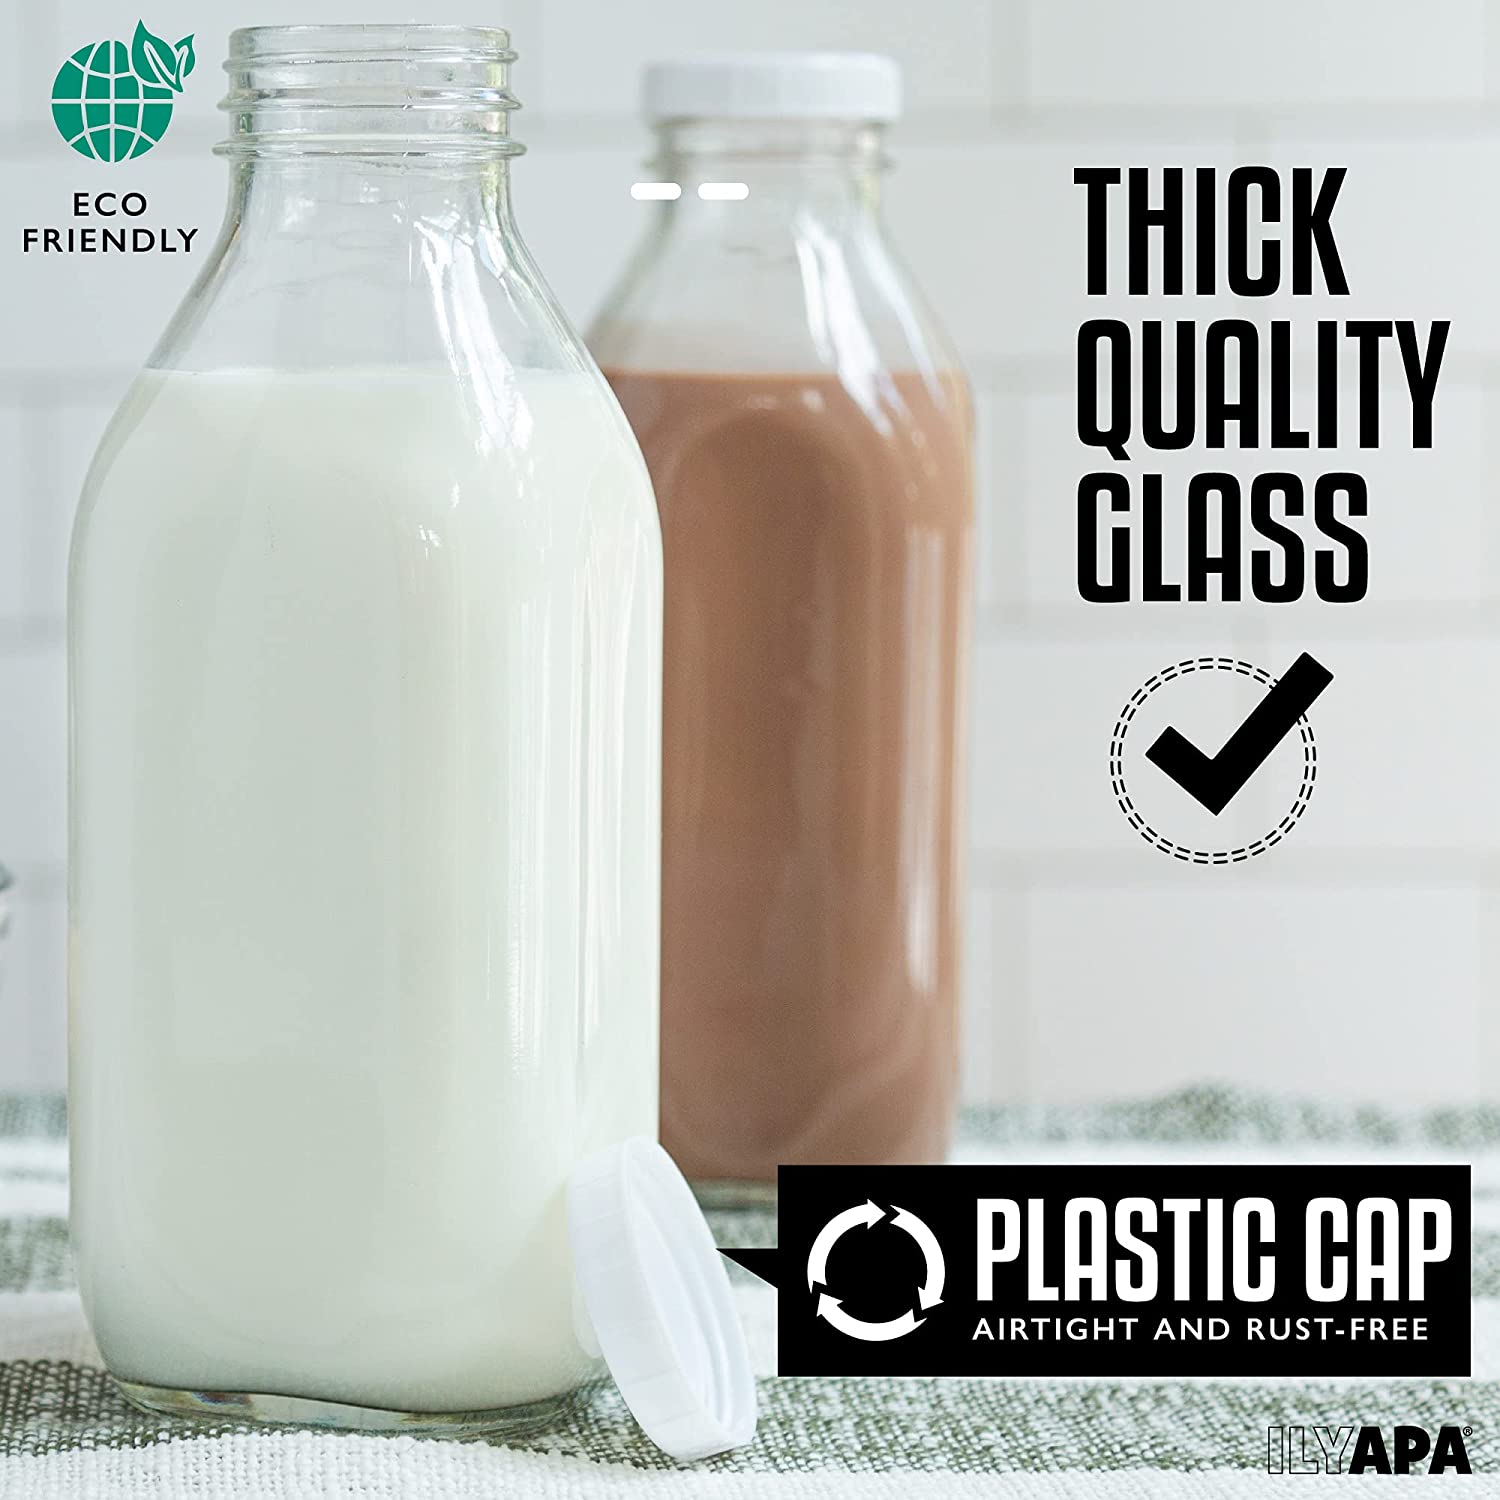 Libbey Glass Milk Bottle with Lid - 33.5 oz